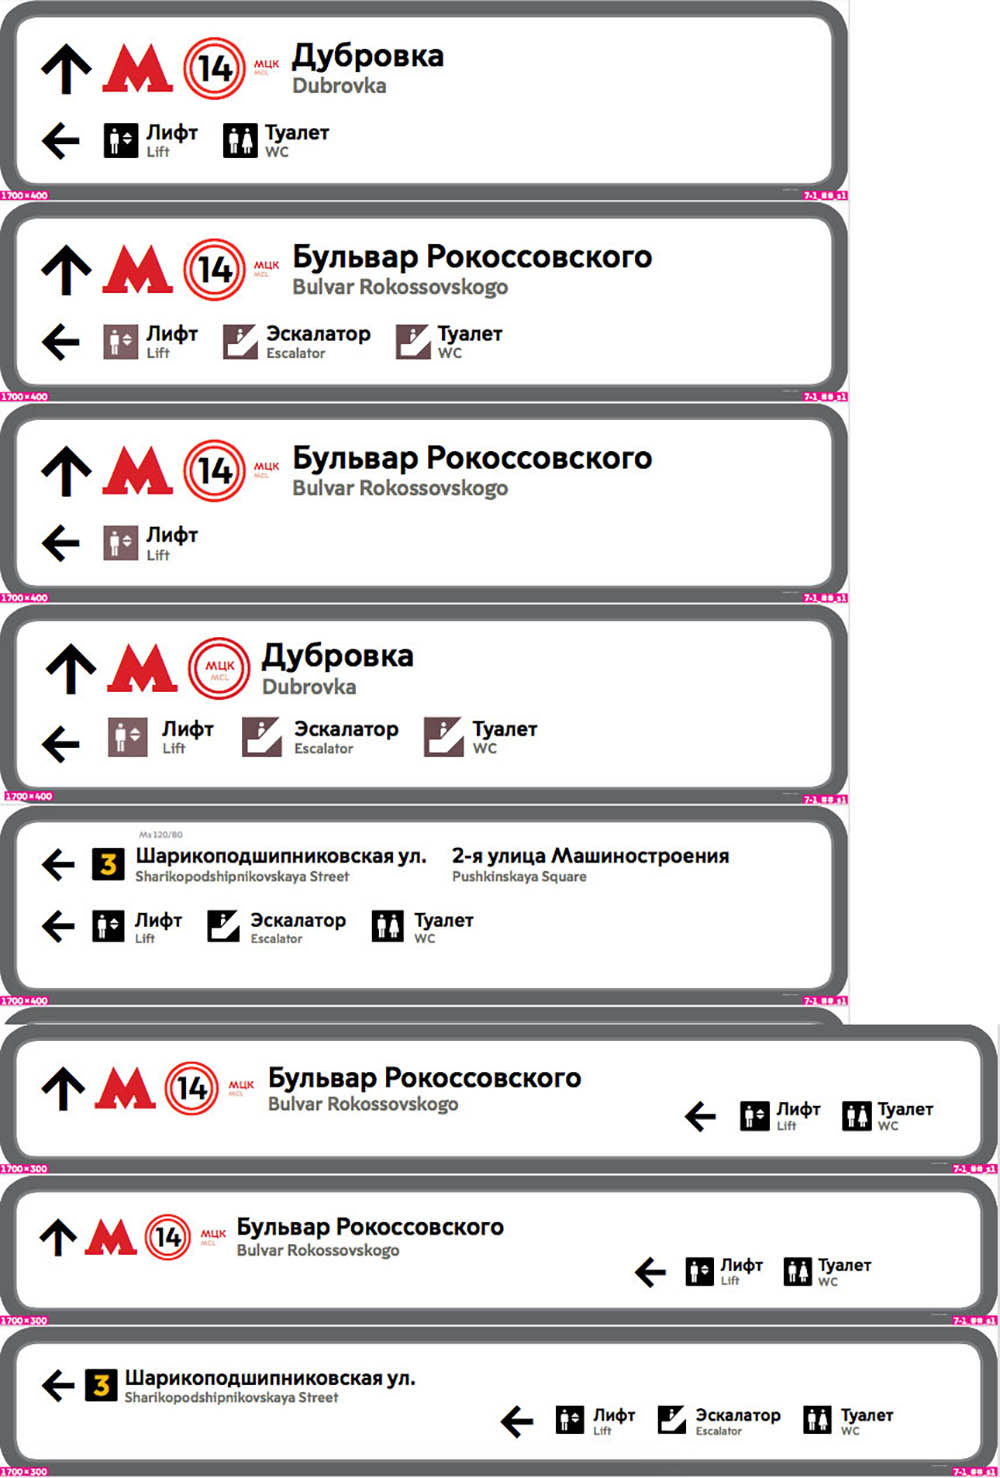 metro mcc navigation process 7 02